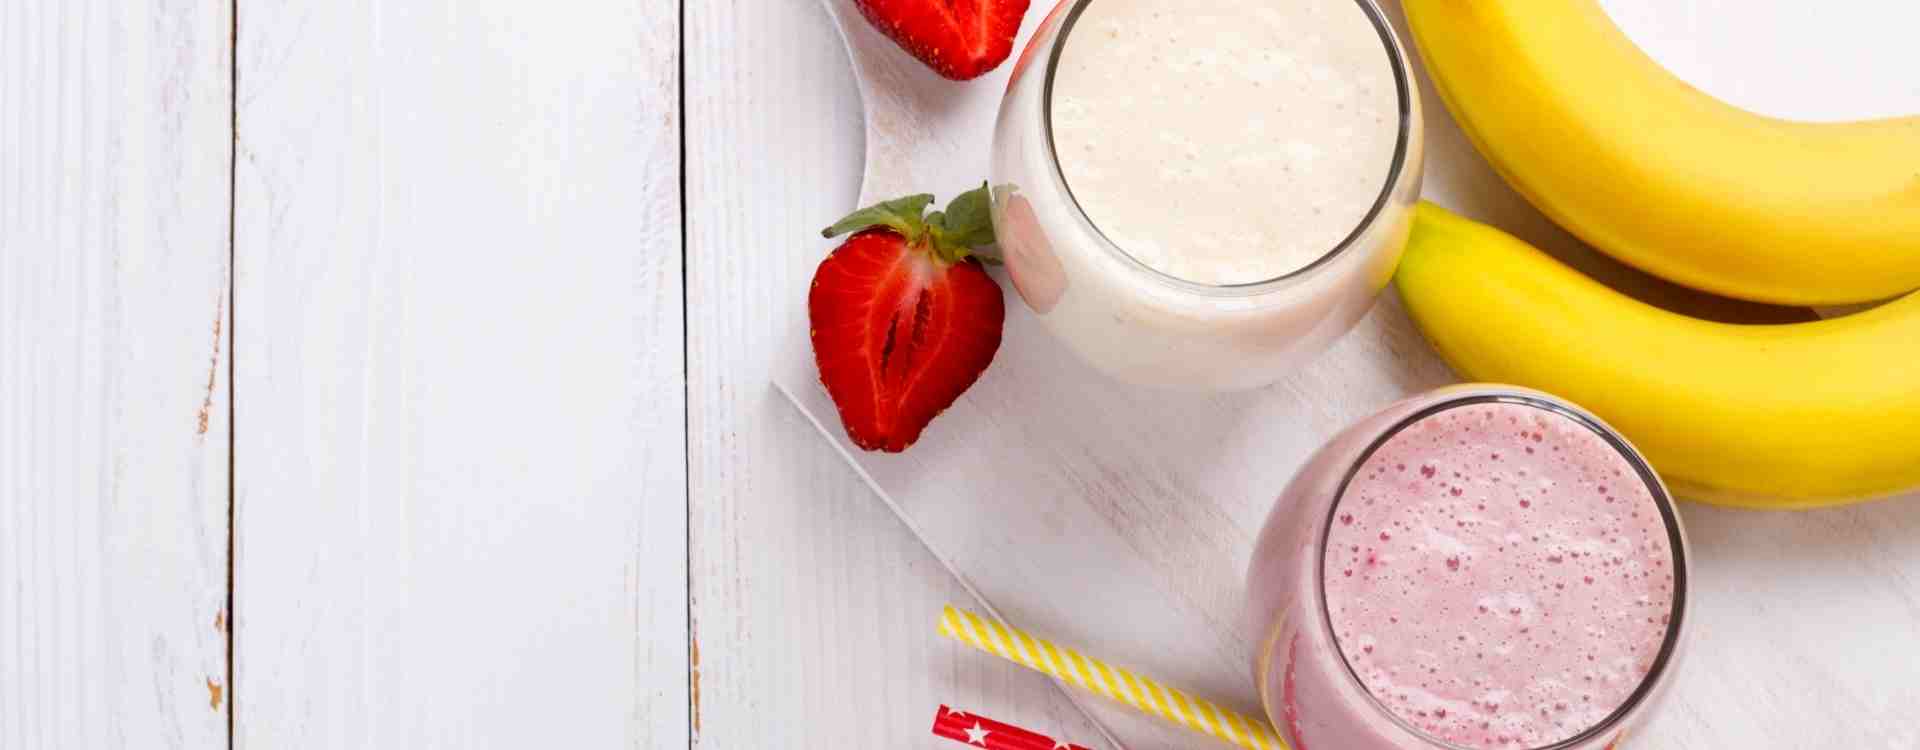 alt=“Healthy CBD Banana Strawberry Recipe”